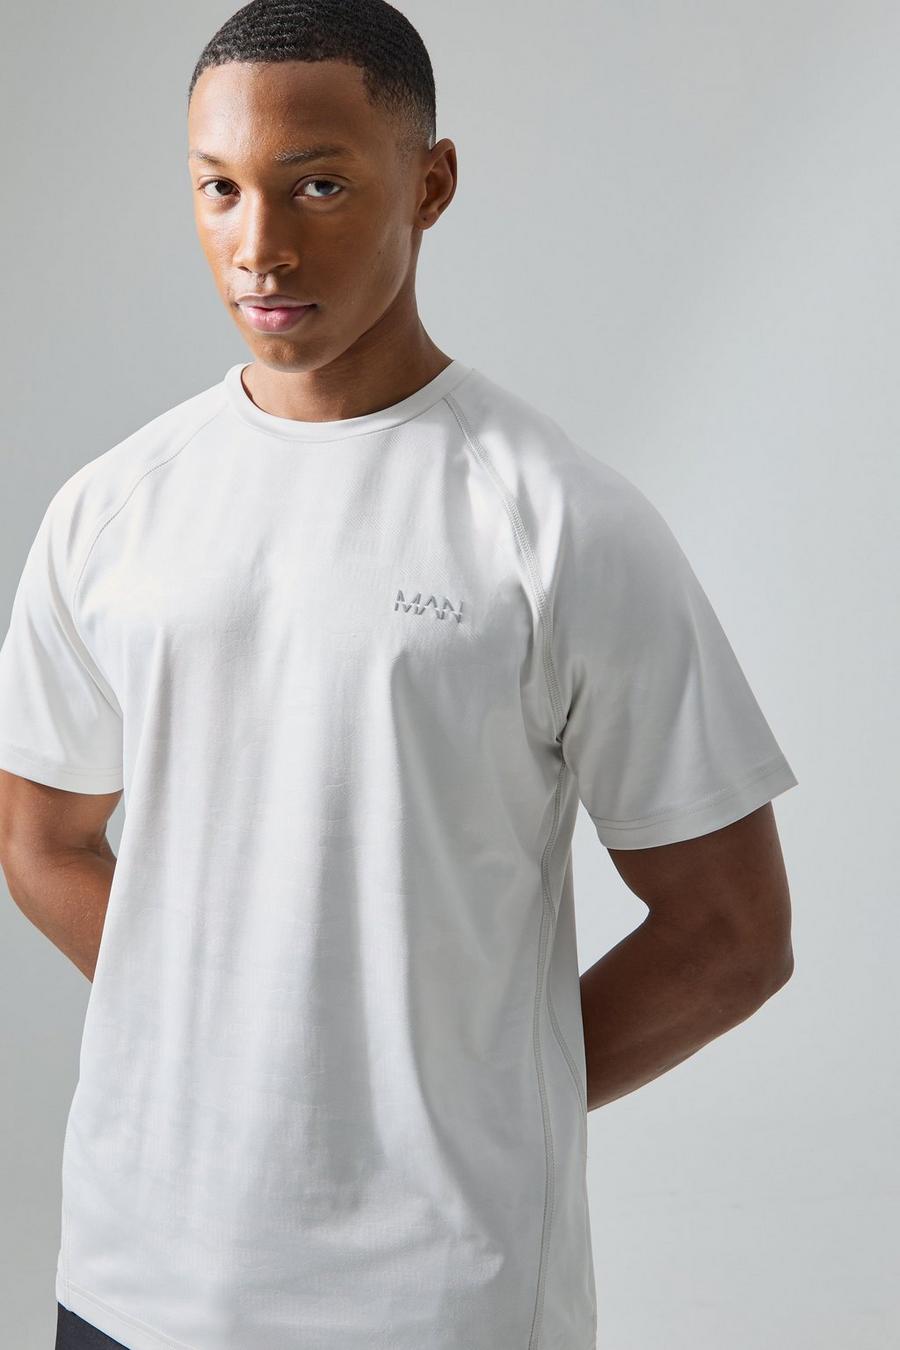 T-shirt Man Active in fantasia militare con maniche raglan, Light grey image number 1